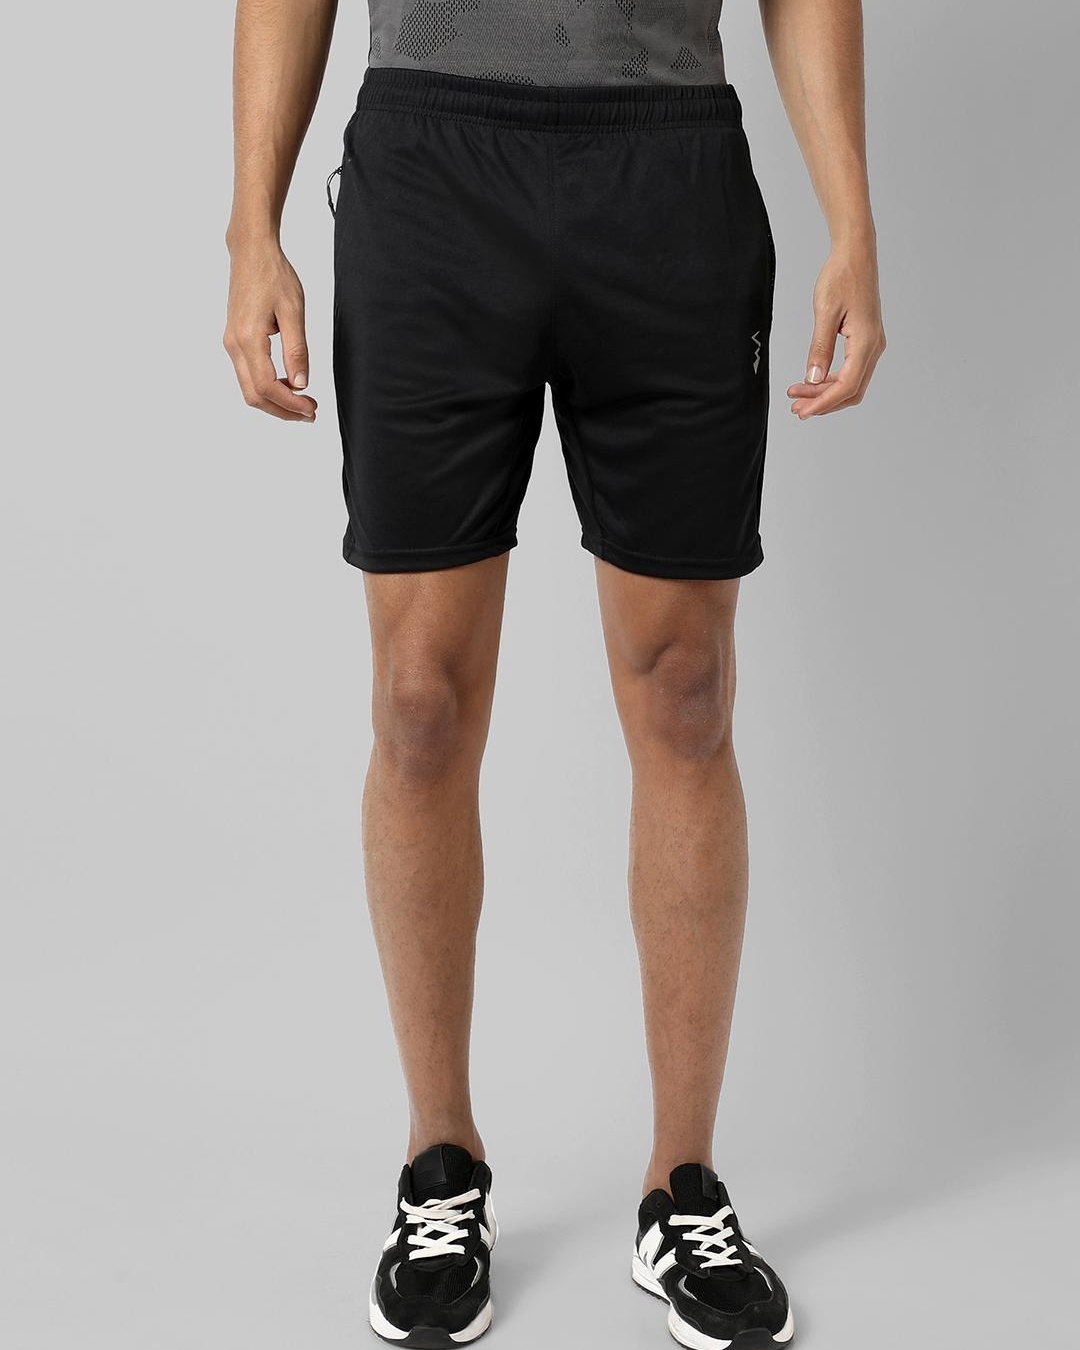 Buy Men's Black Shorts Online at Bewakoof